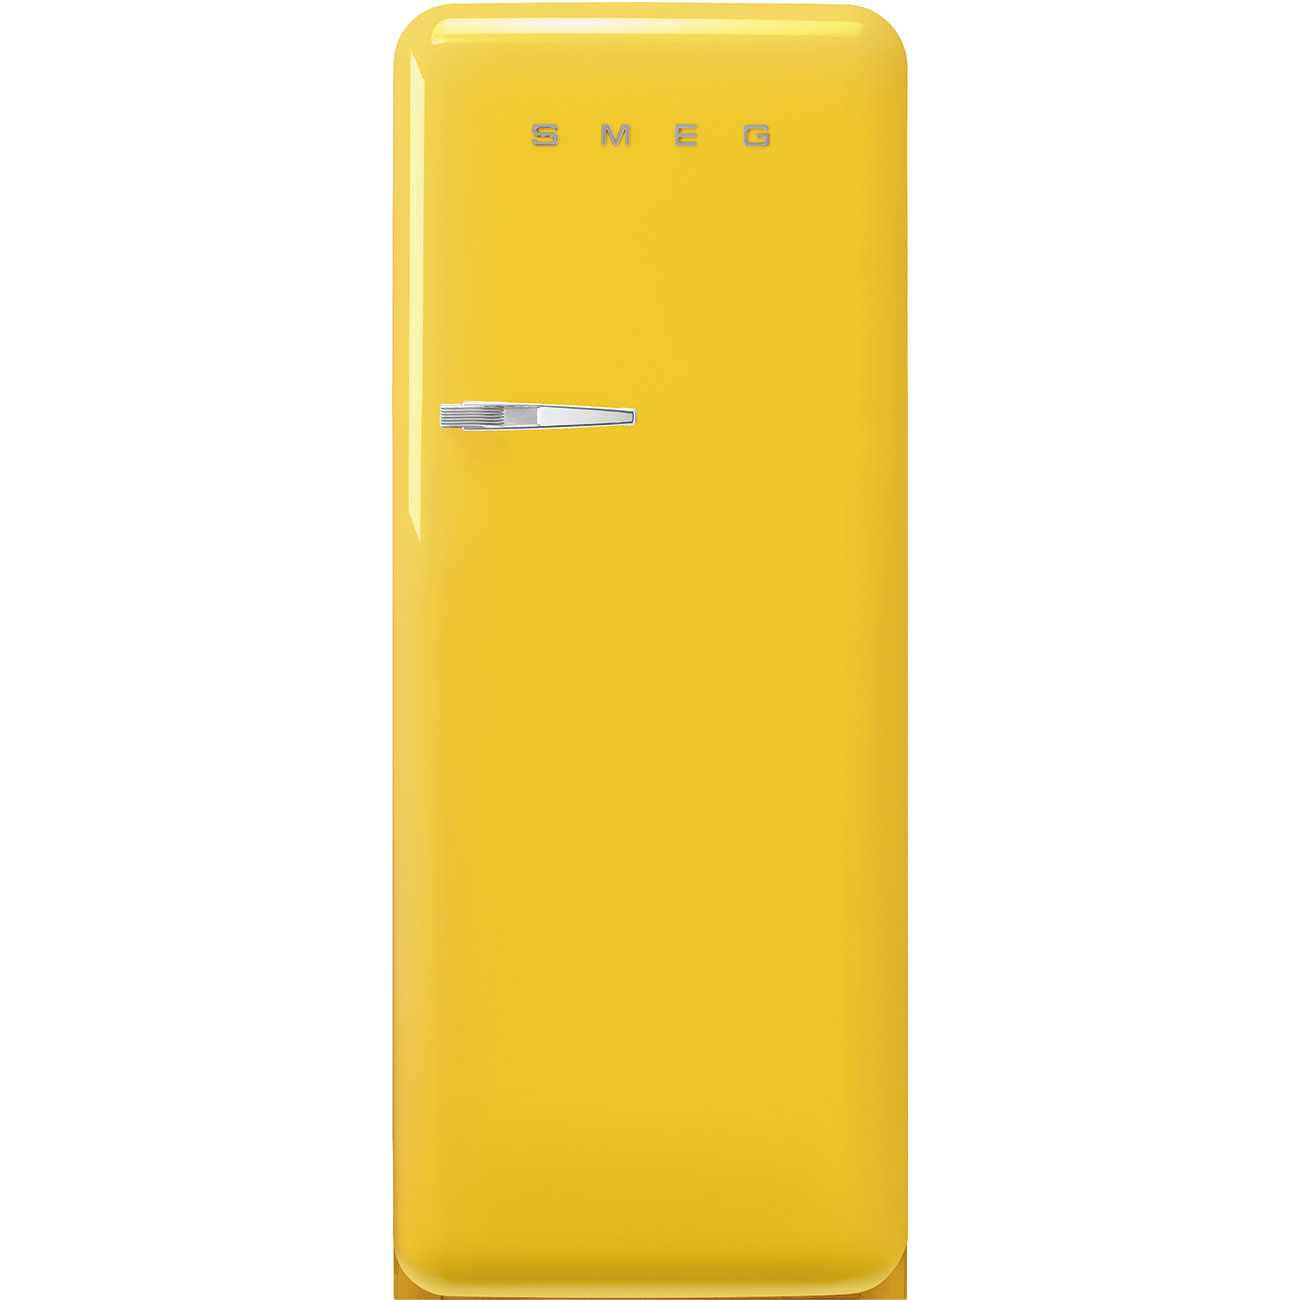 Yellow refrigerator - Smeg_1